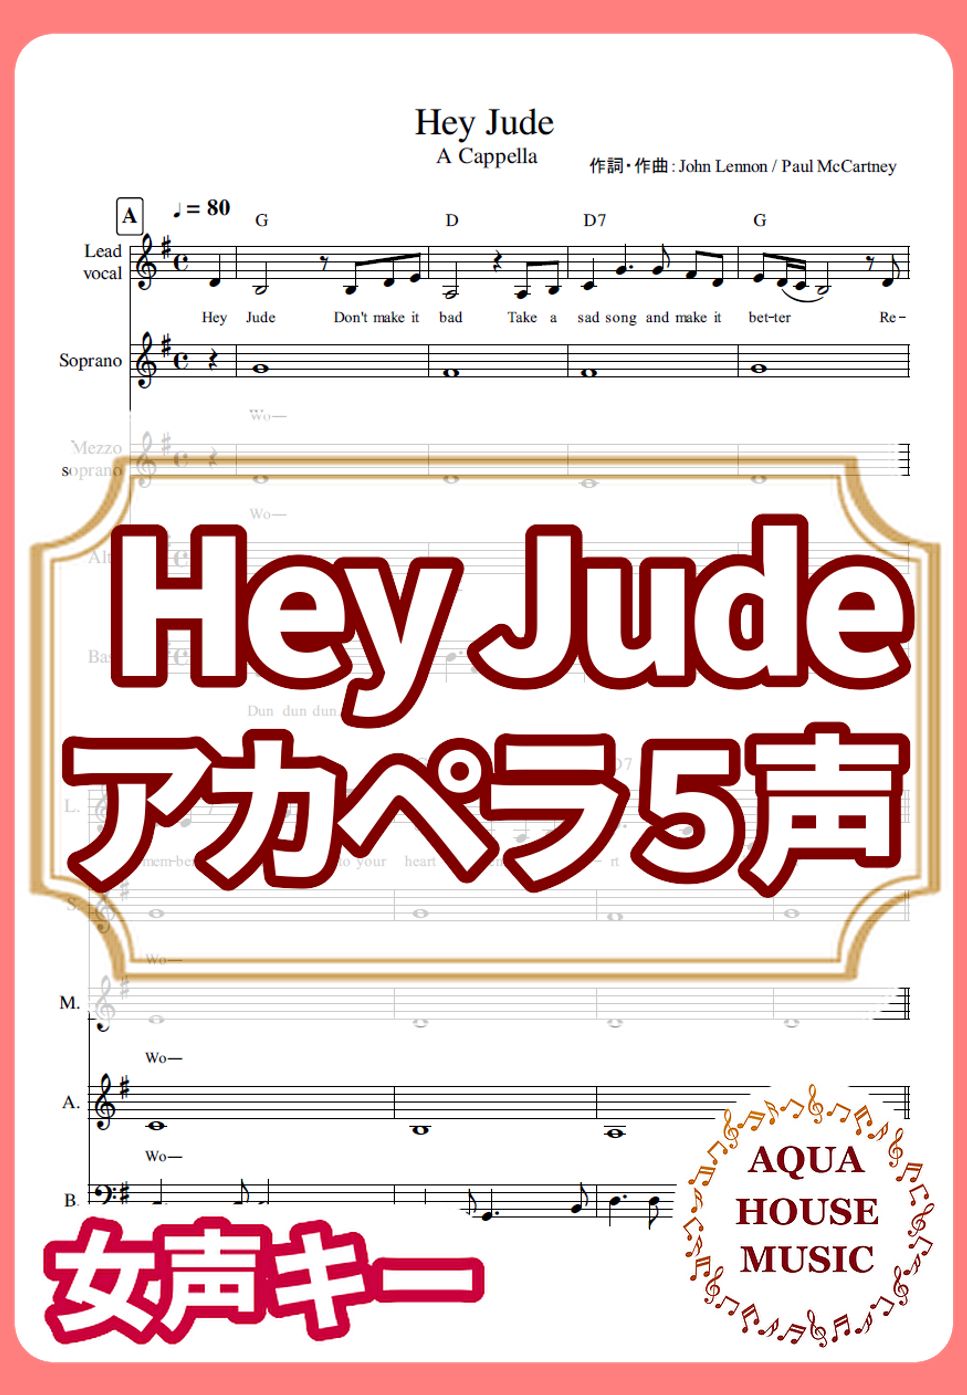 The Beatles - Hey Jude (アカペラ楽譜♪5声ボイパなし) by 飯田 亜紗子